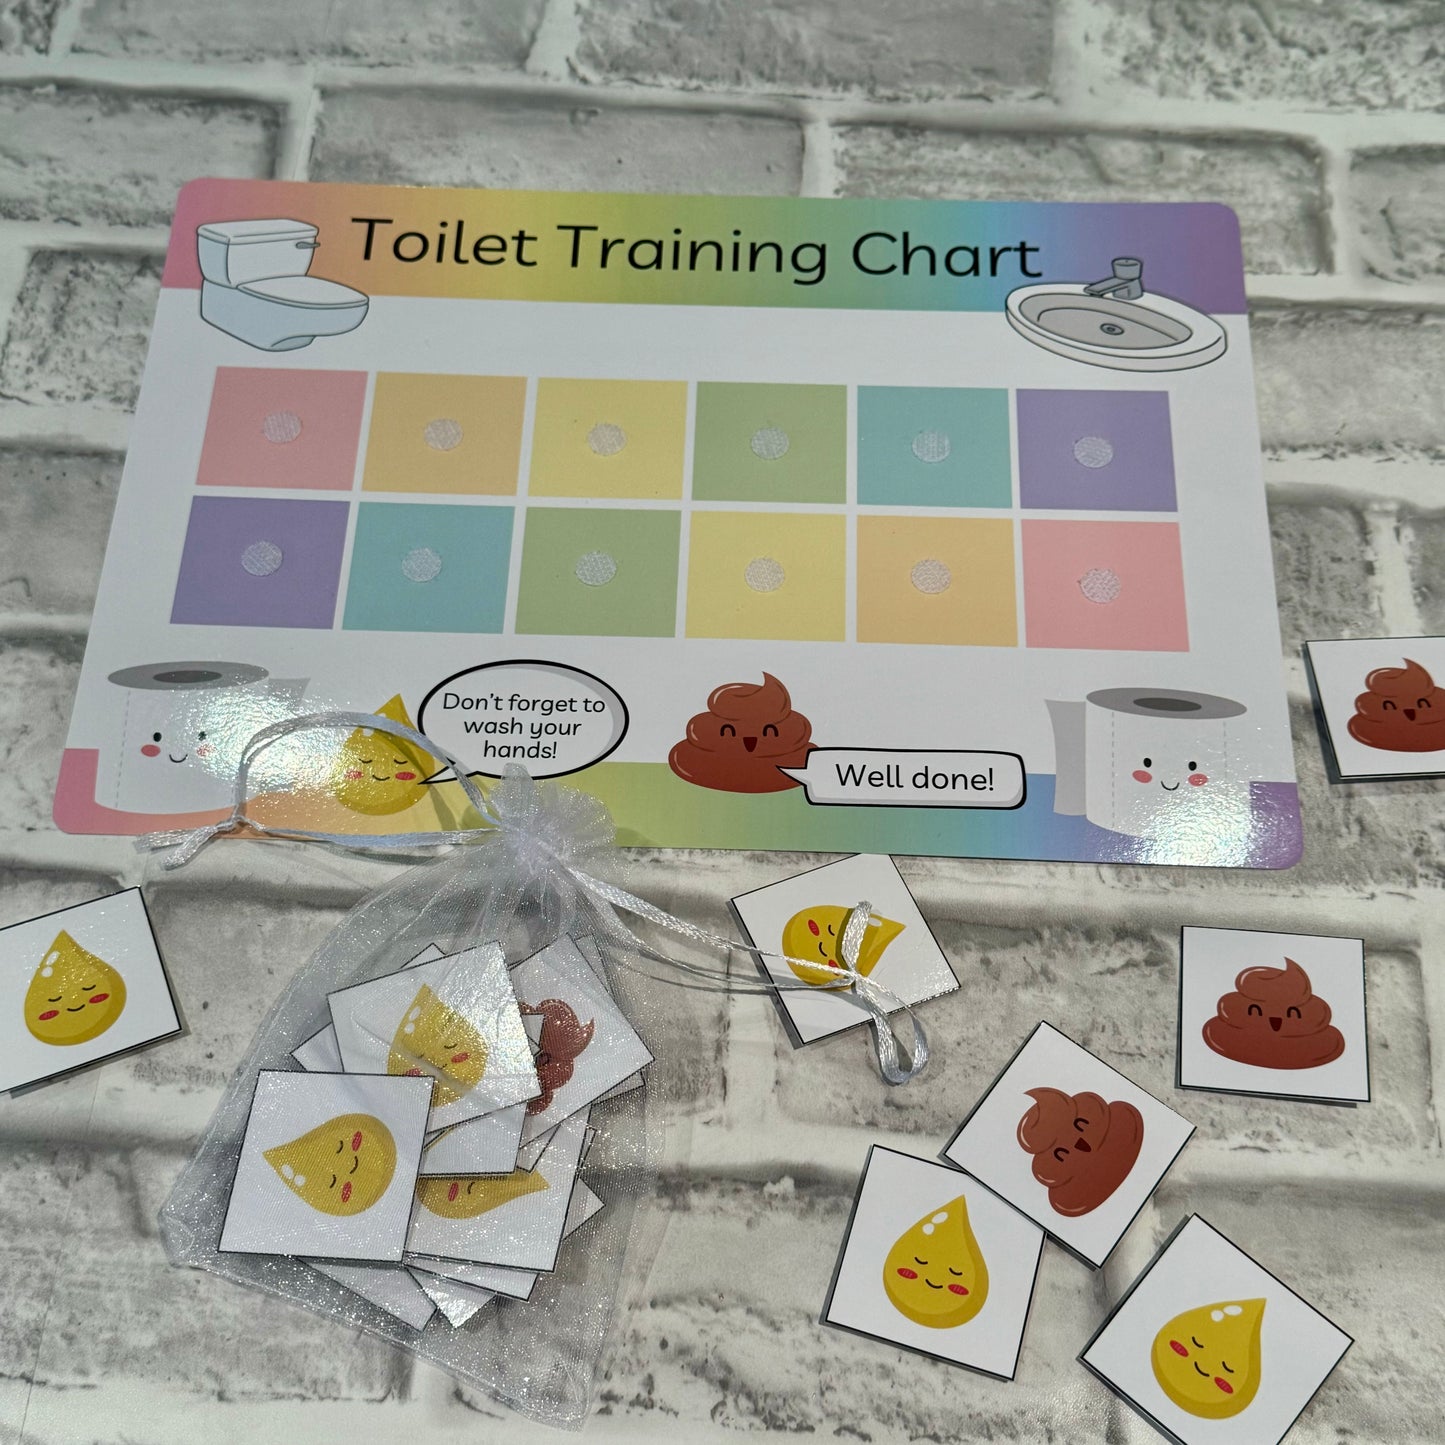 Toilet Training Chart (potty training)